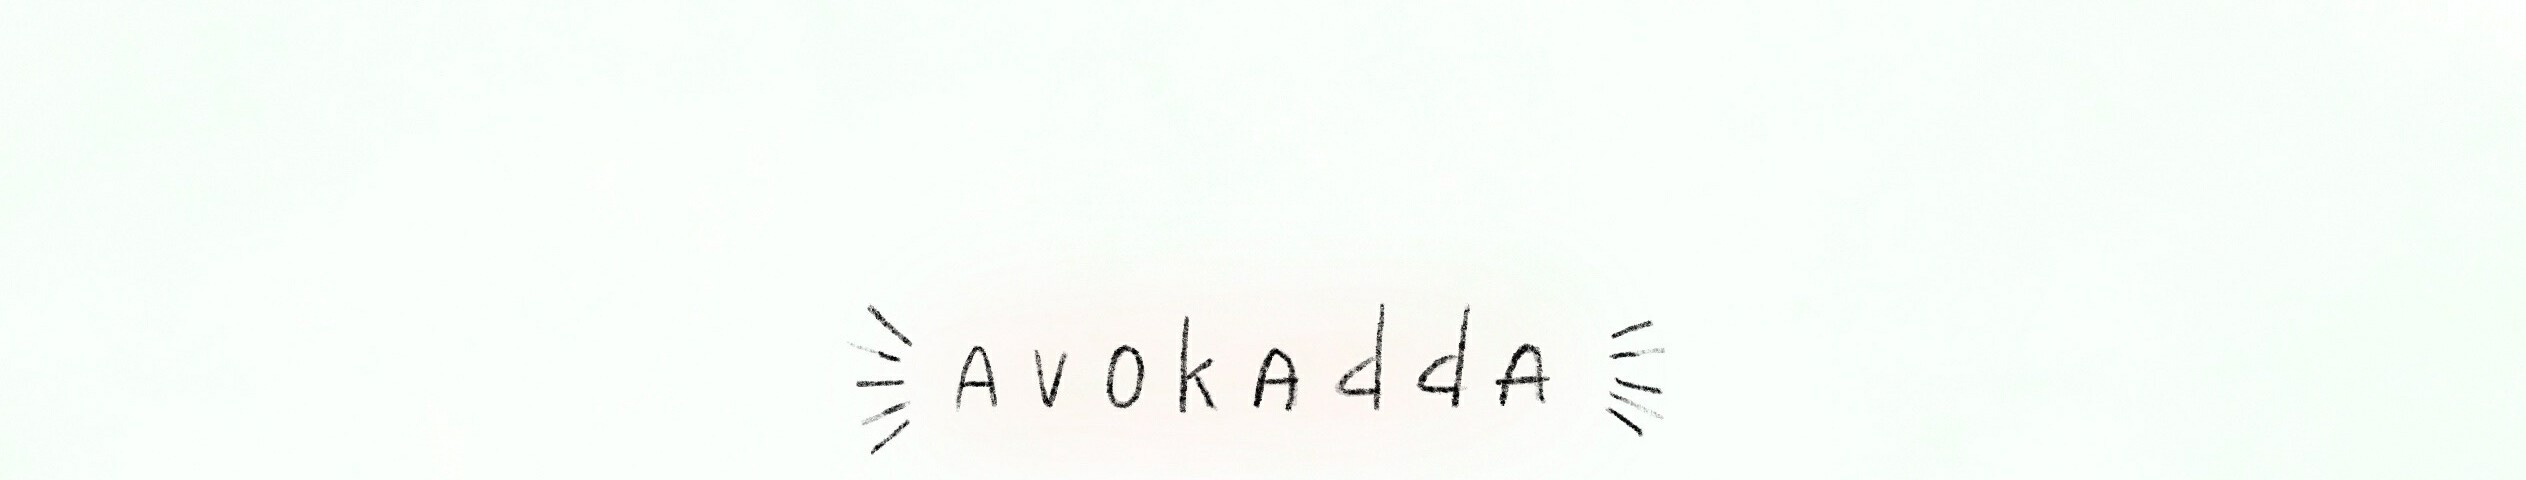 creator cover Avokadda